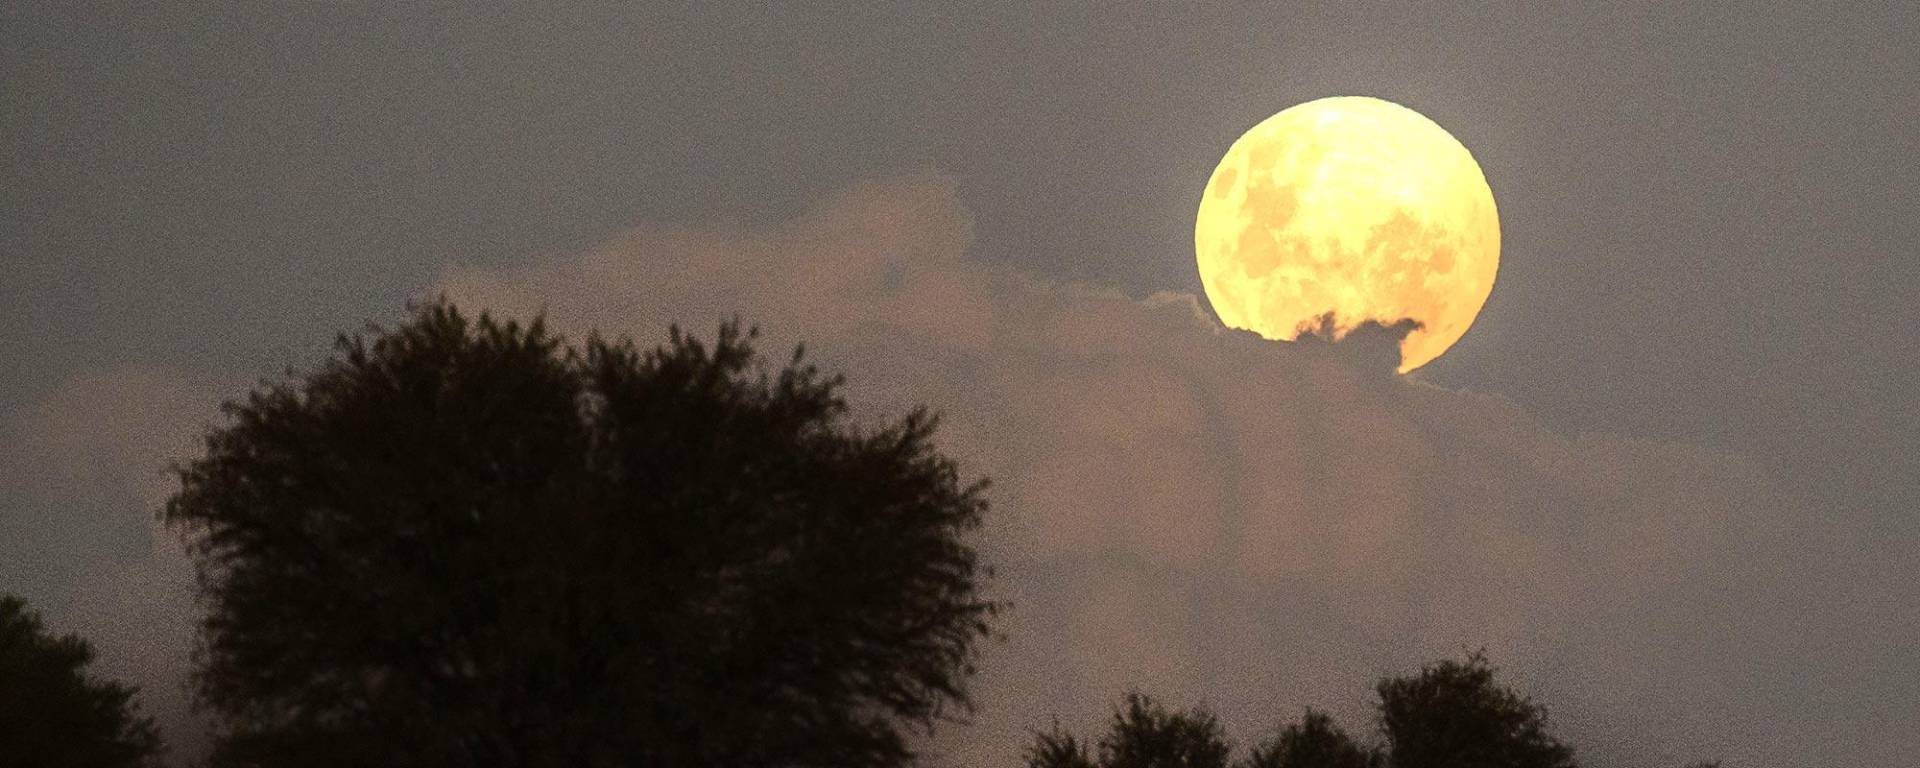 Full moon in Namibia